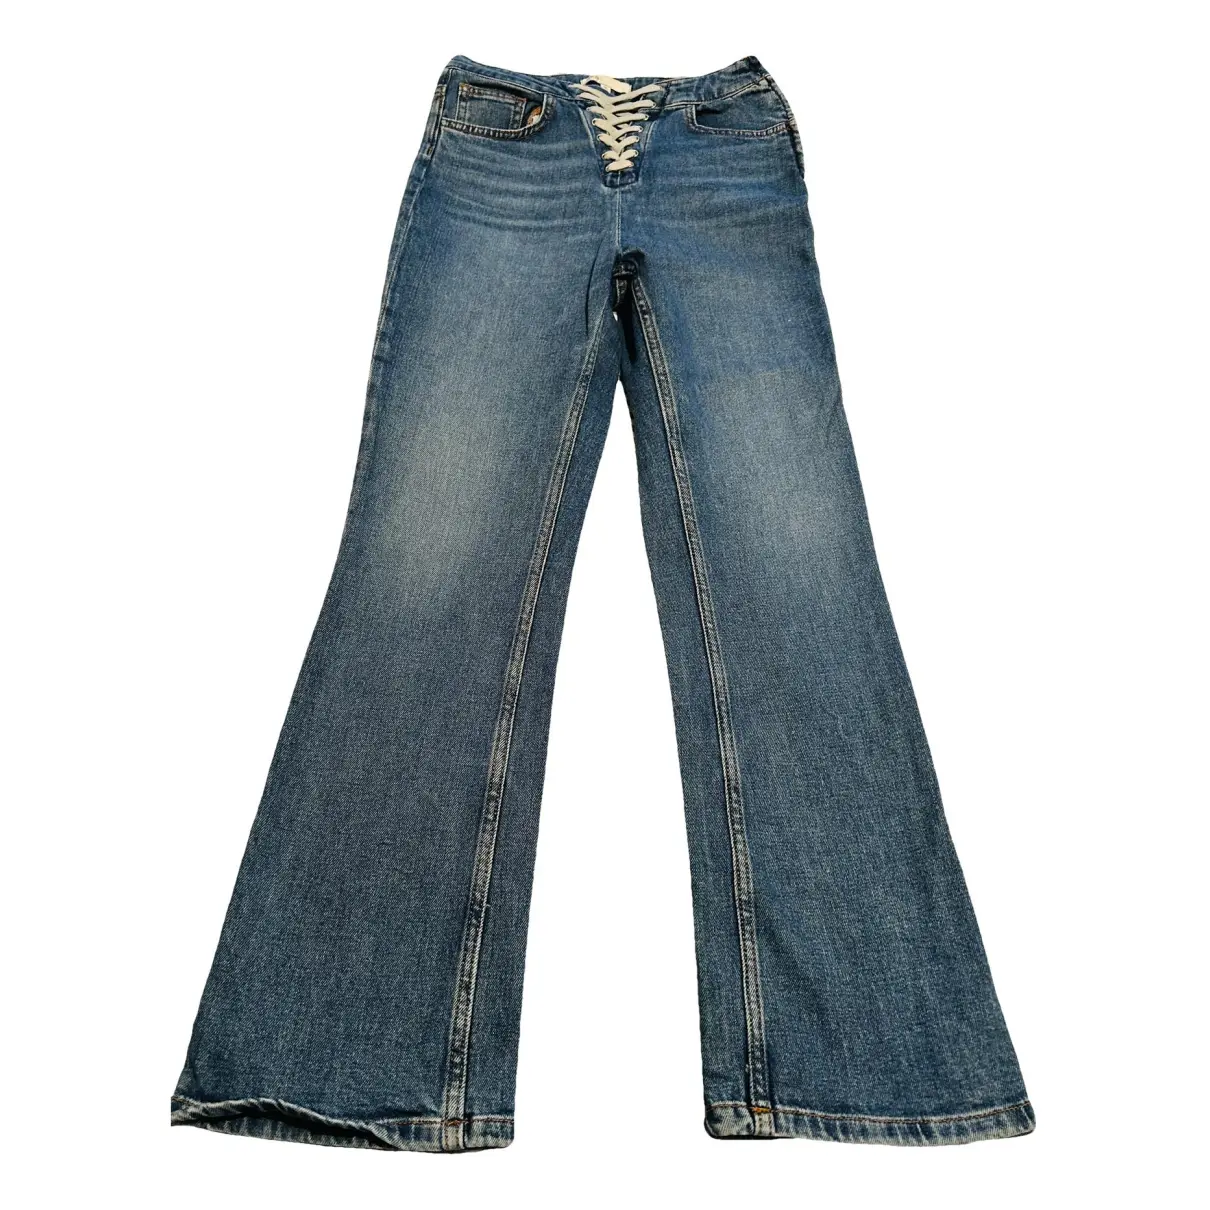 Spring Summer 2021 large jeans